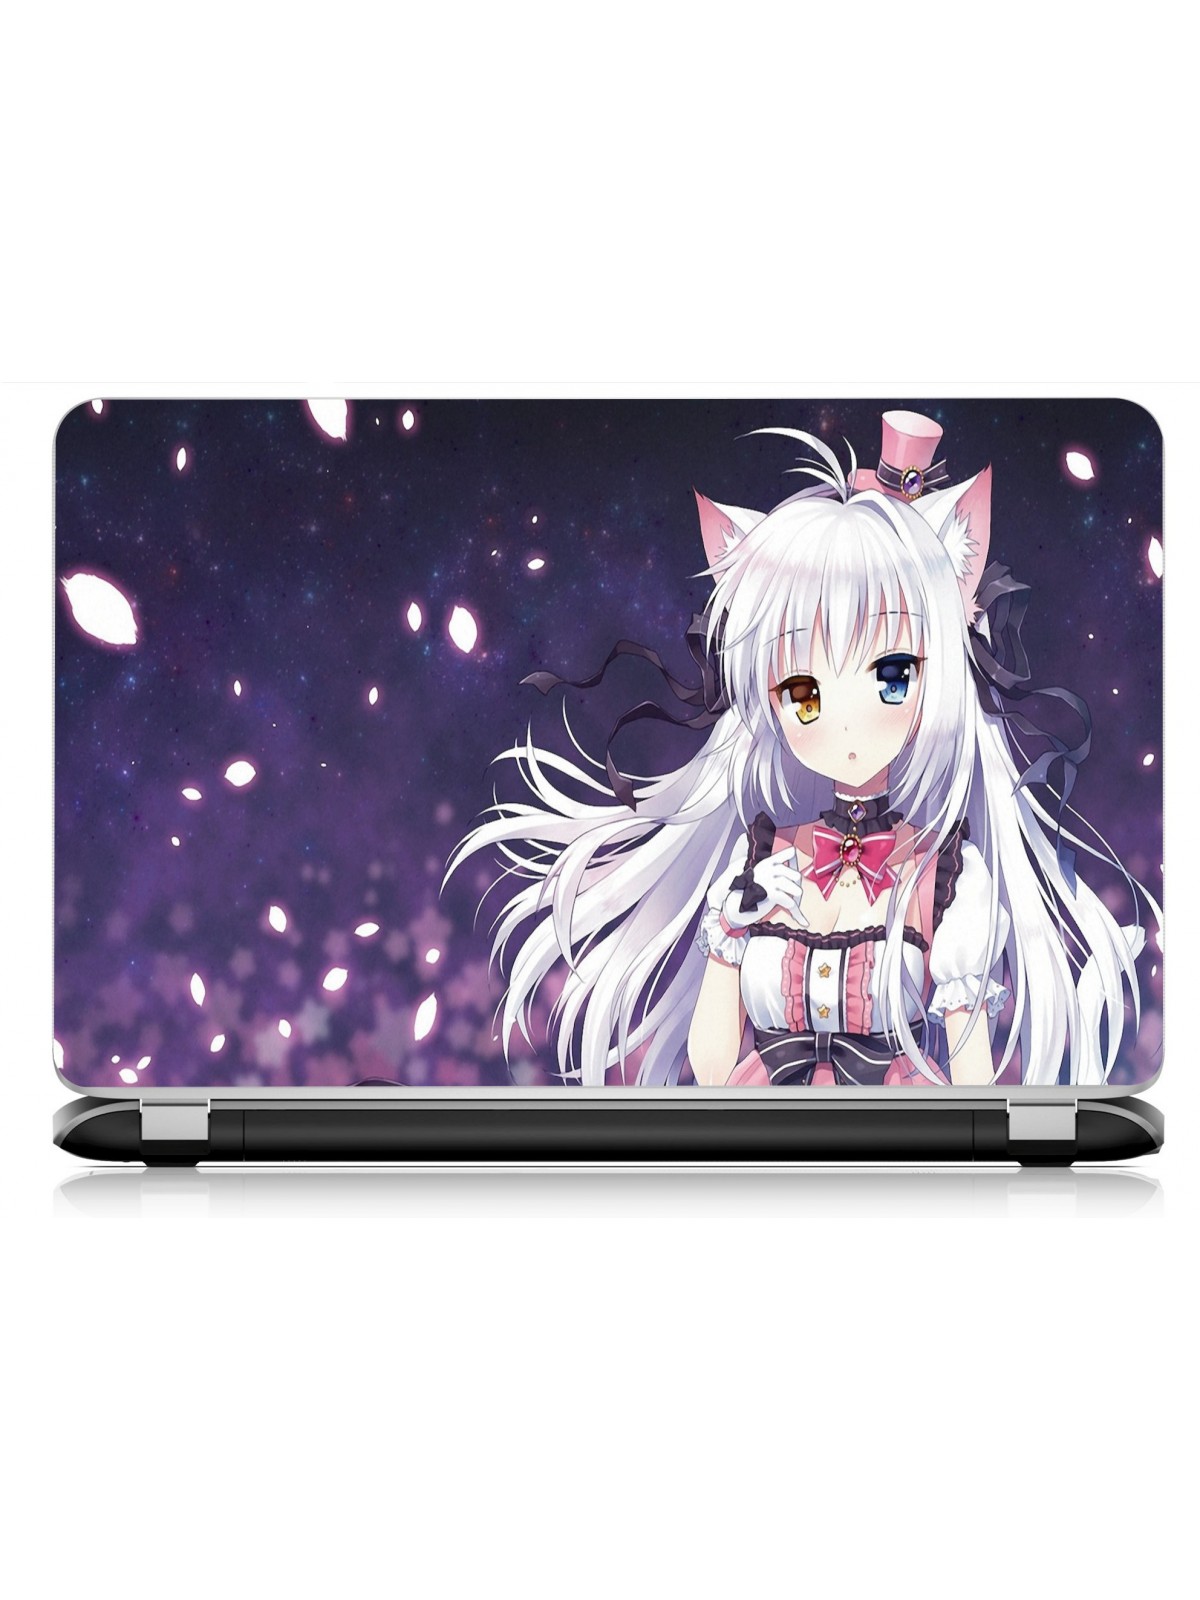 Stickers Autocollants ordinateur portable PC manga girl ref 477